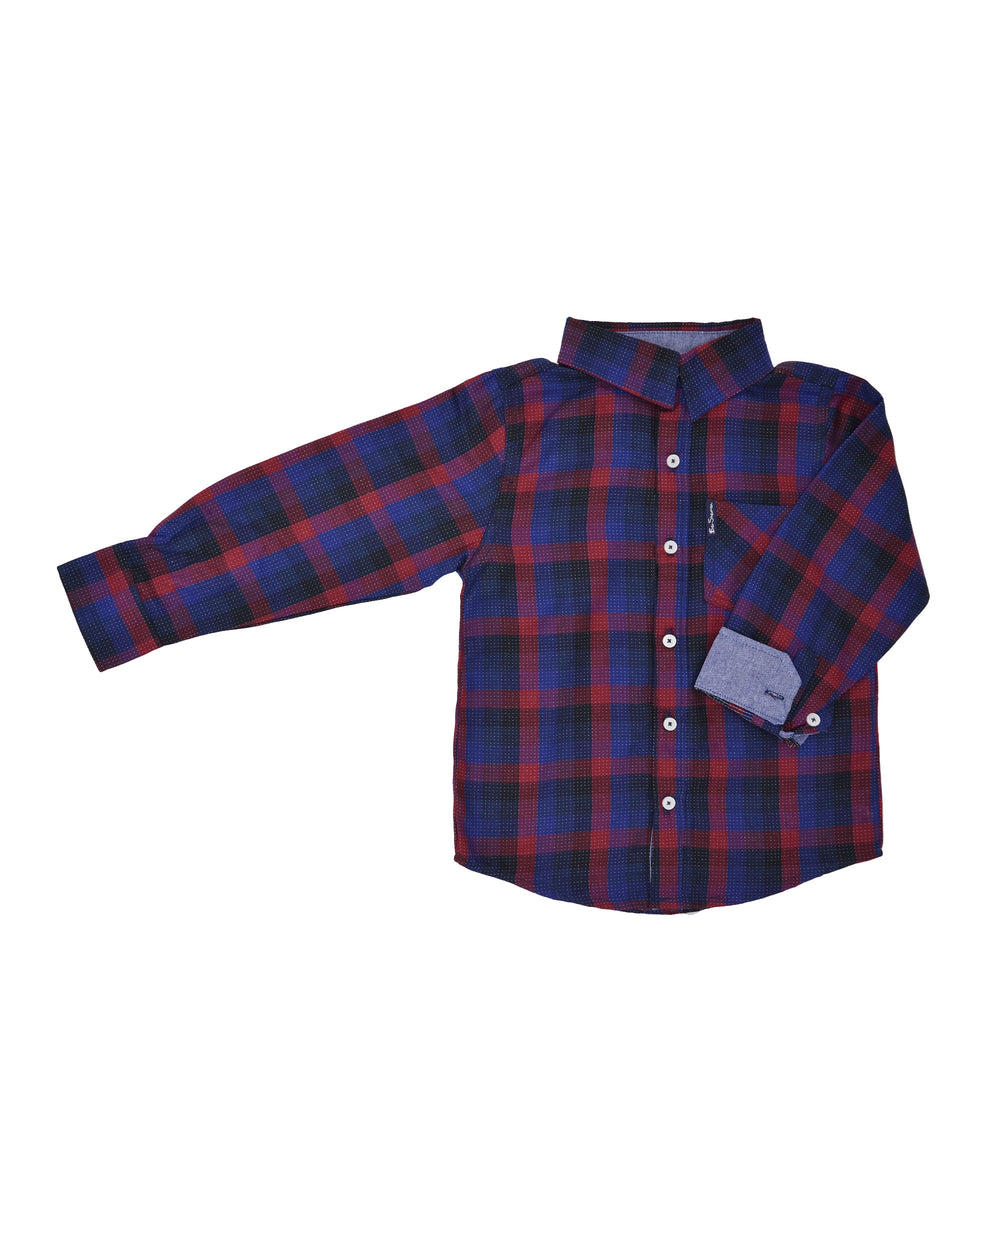 Boys' Black/Blue/Red Plaid Button-Down Shirt (Sizes 4-7)